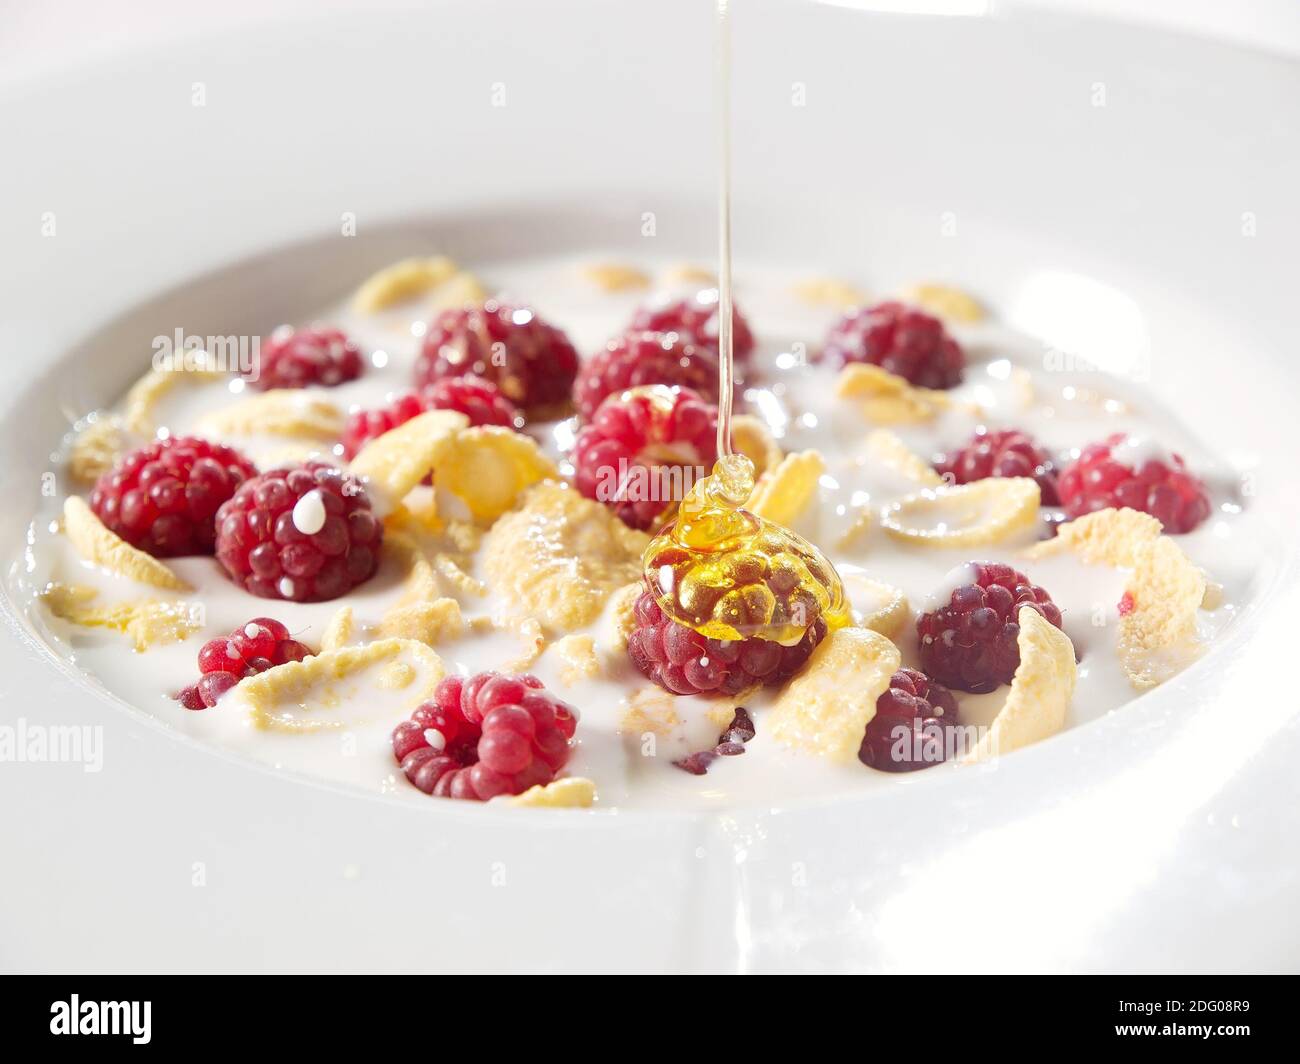 https://c8.alamy.com/comp/2DG08R9/honey-corn-flakes-with-fresh-raspberry-and-pouring-milk-in-bowl-2DG08R9.jpg